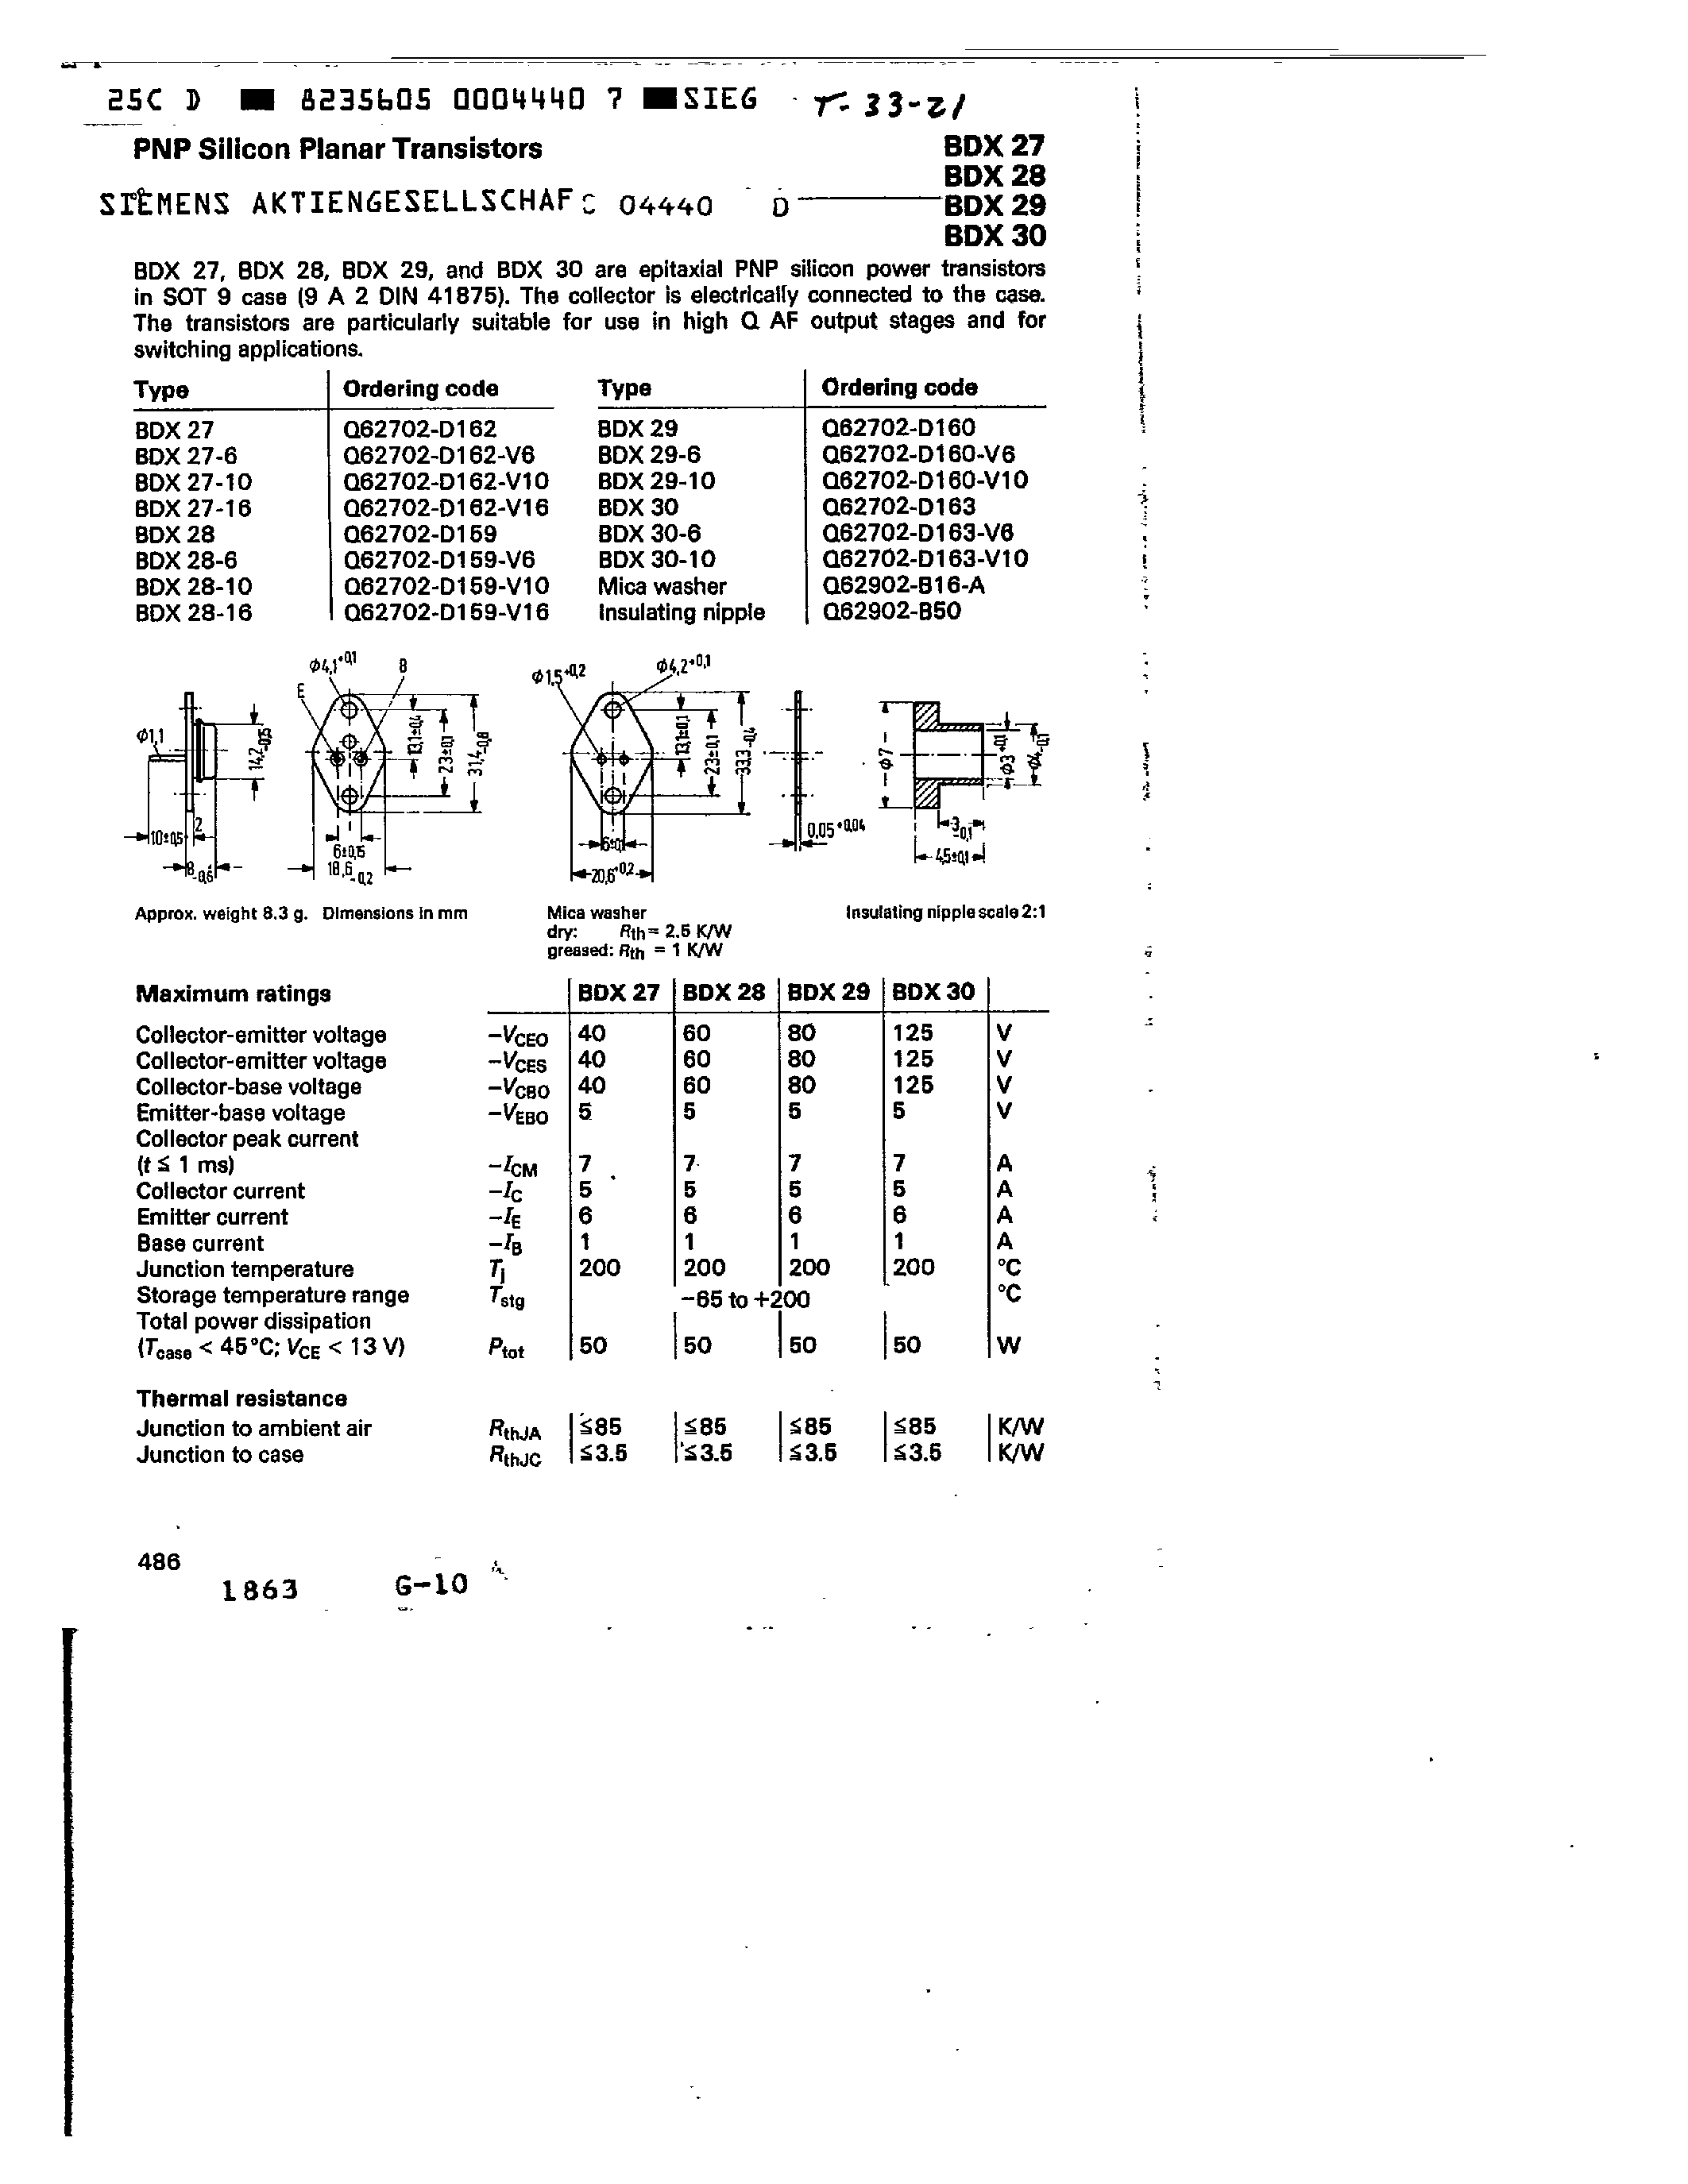 Datasheet BDX28-10 - PNP SILICON PLANAR TRANSISTORS page 1